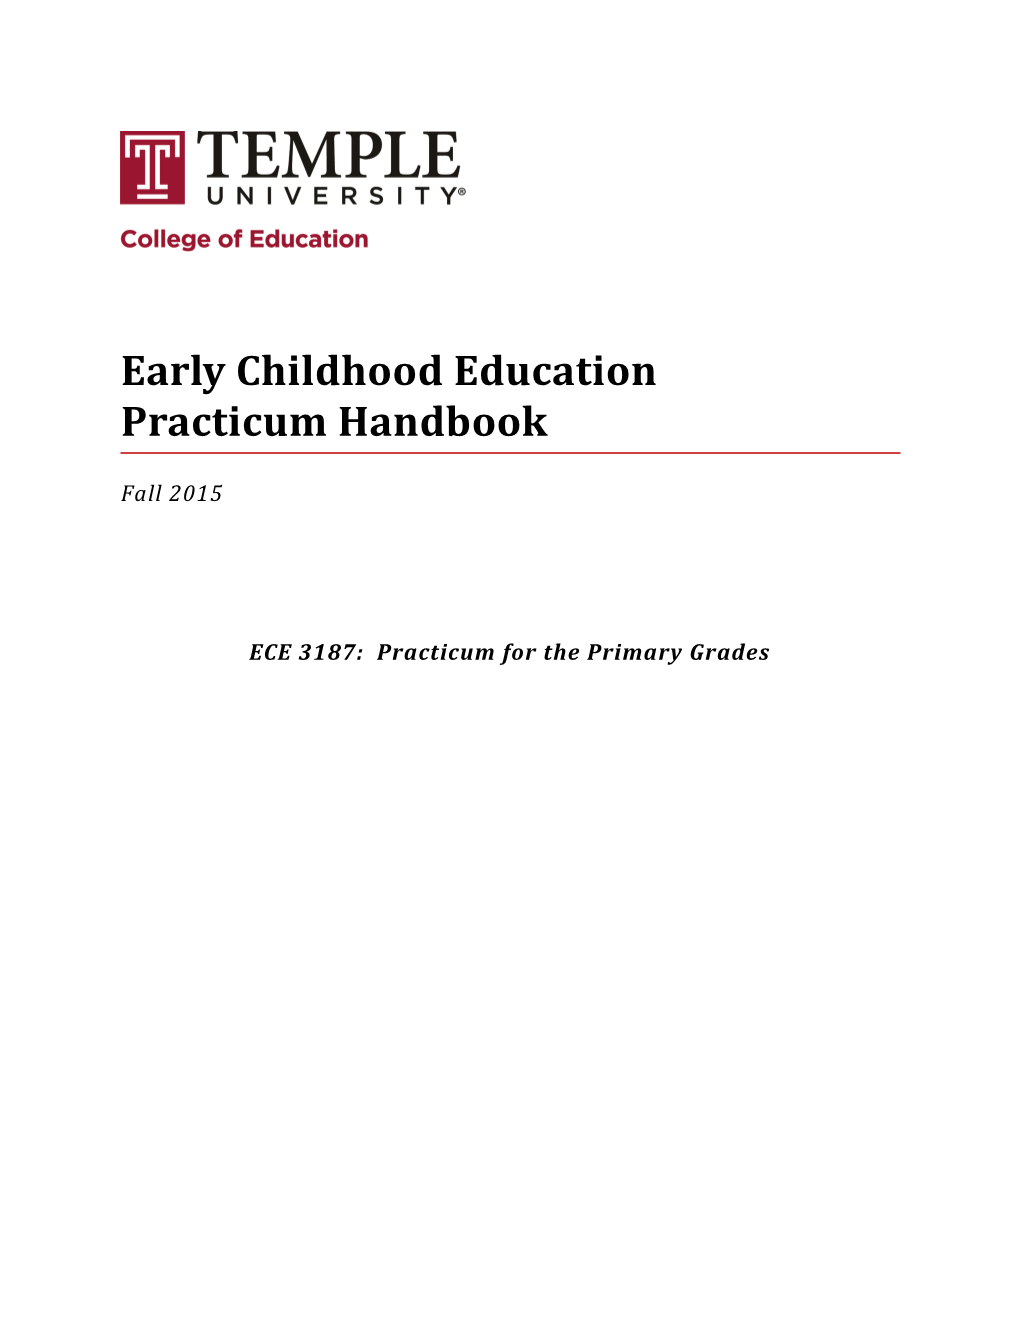 ECE 3187: Practicum for the Primary Grades